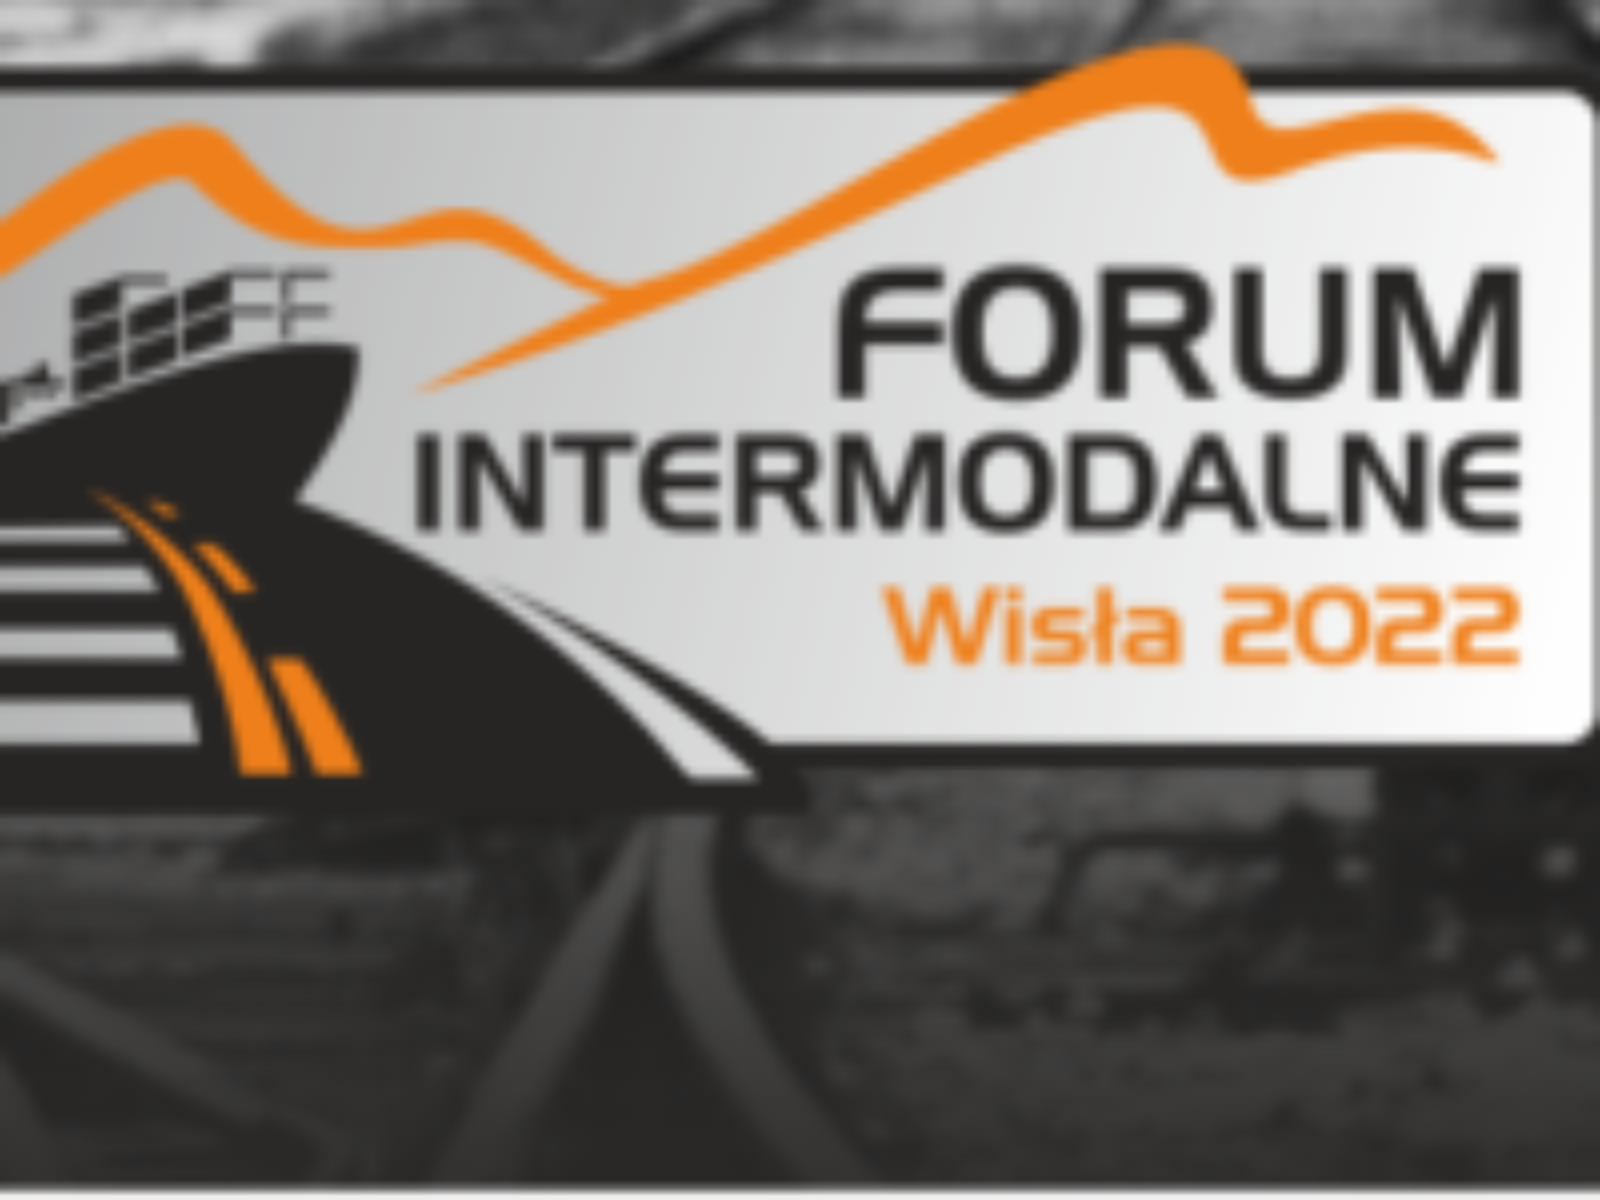 forum intermodalne